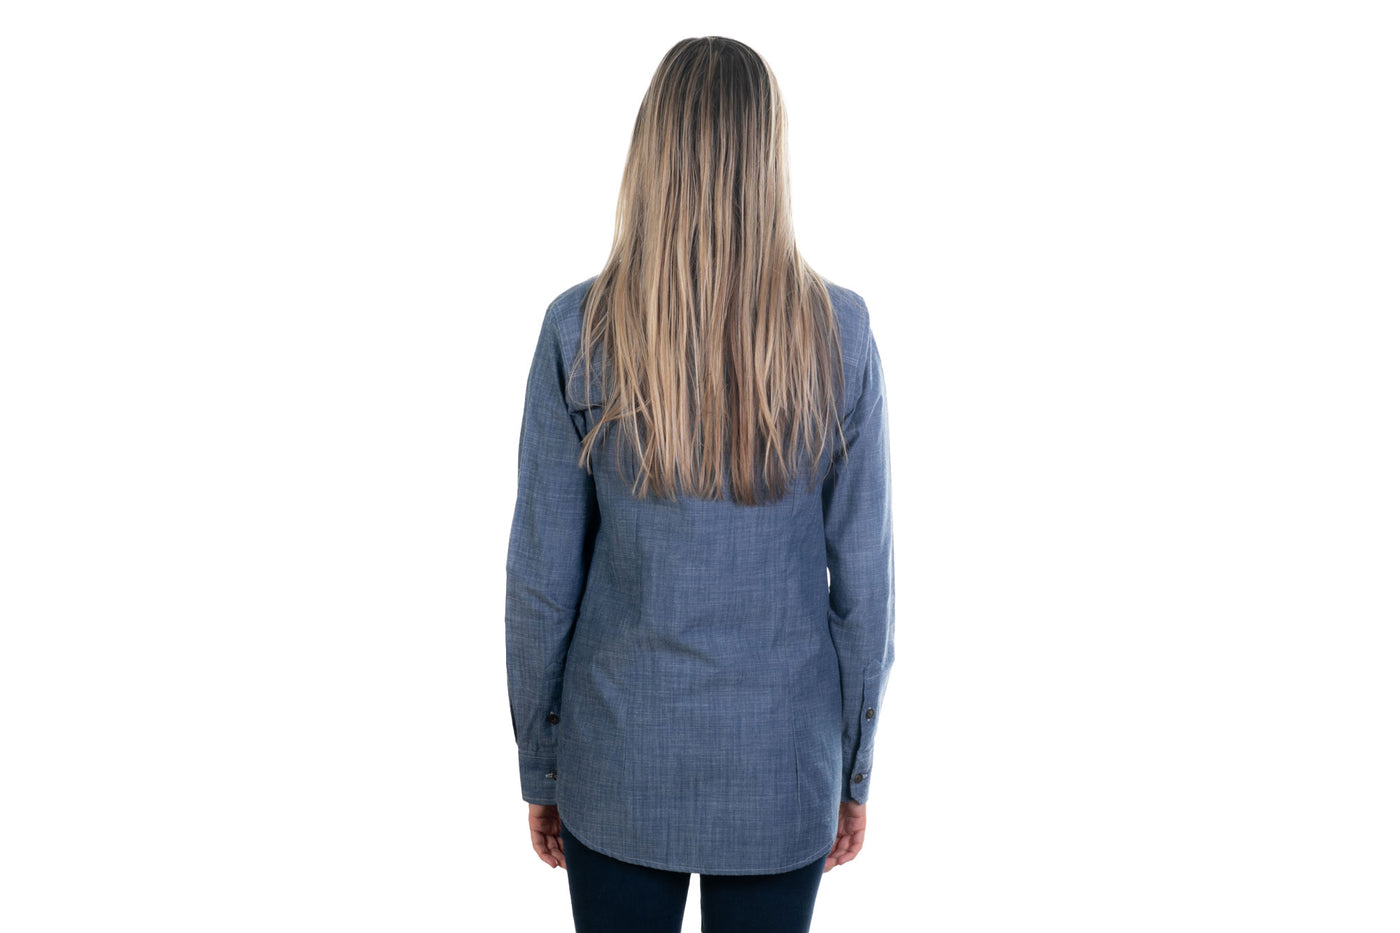 Women's Cascade Shirt- Indigo Blue Chambray